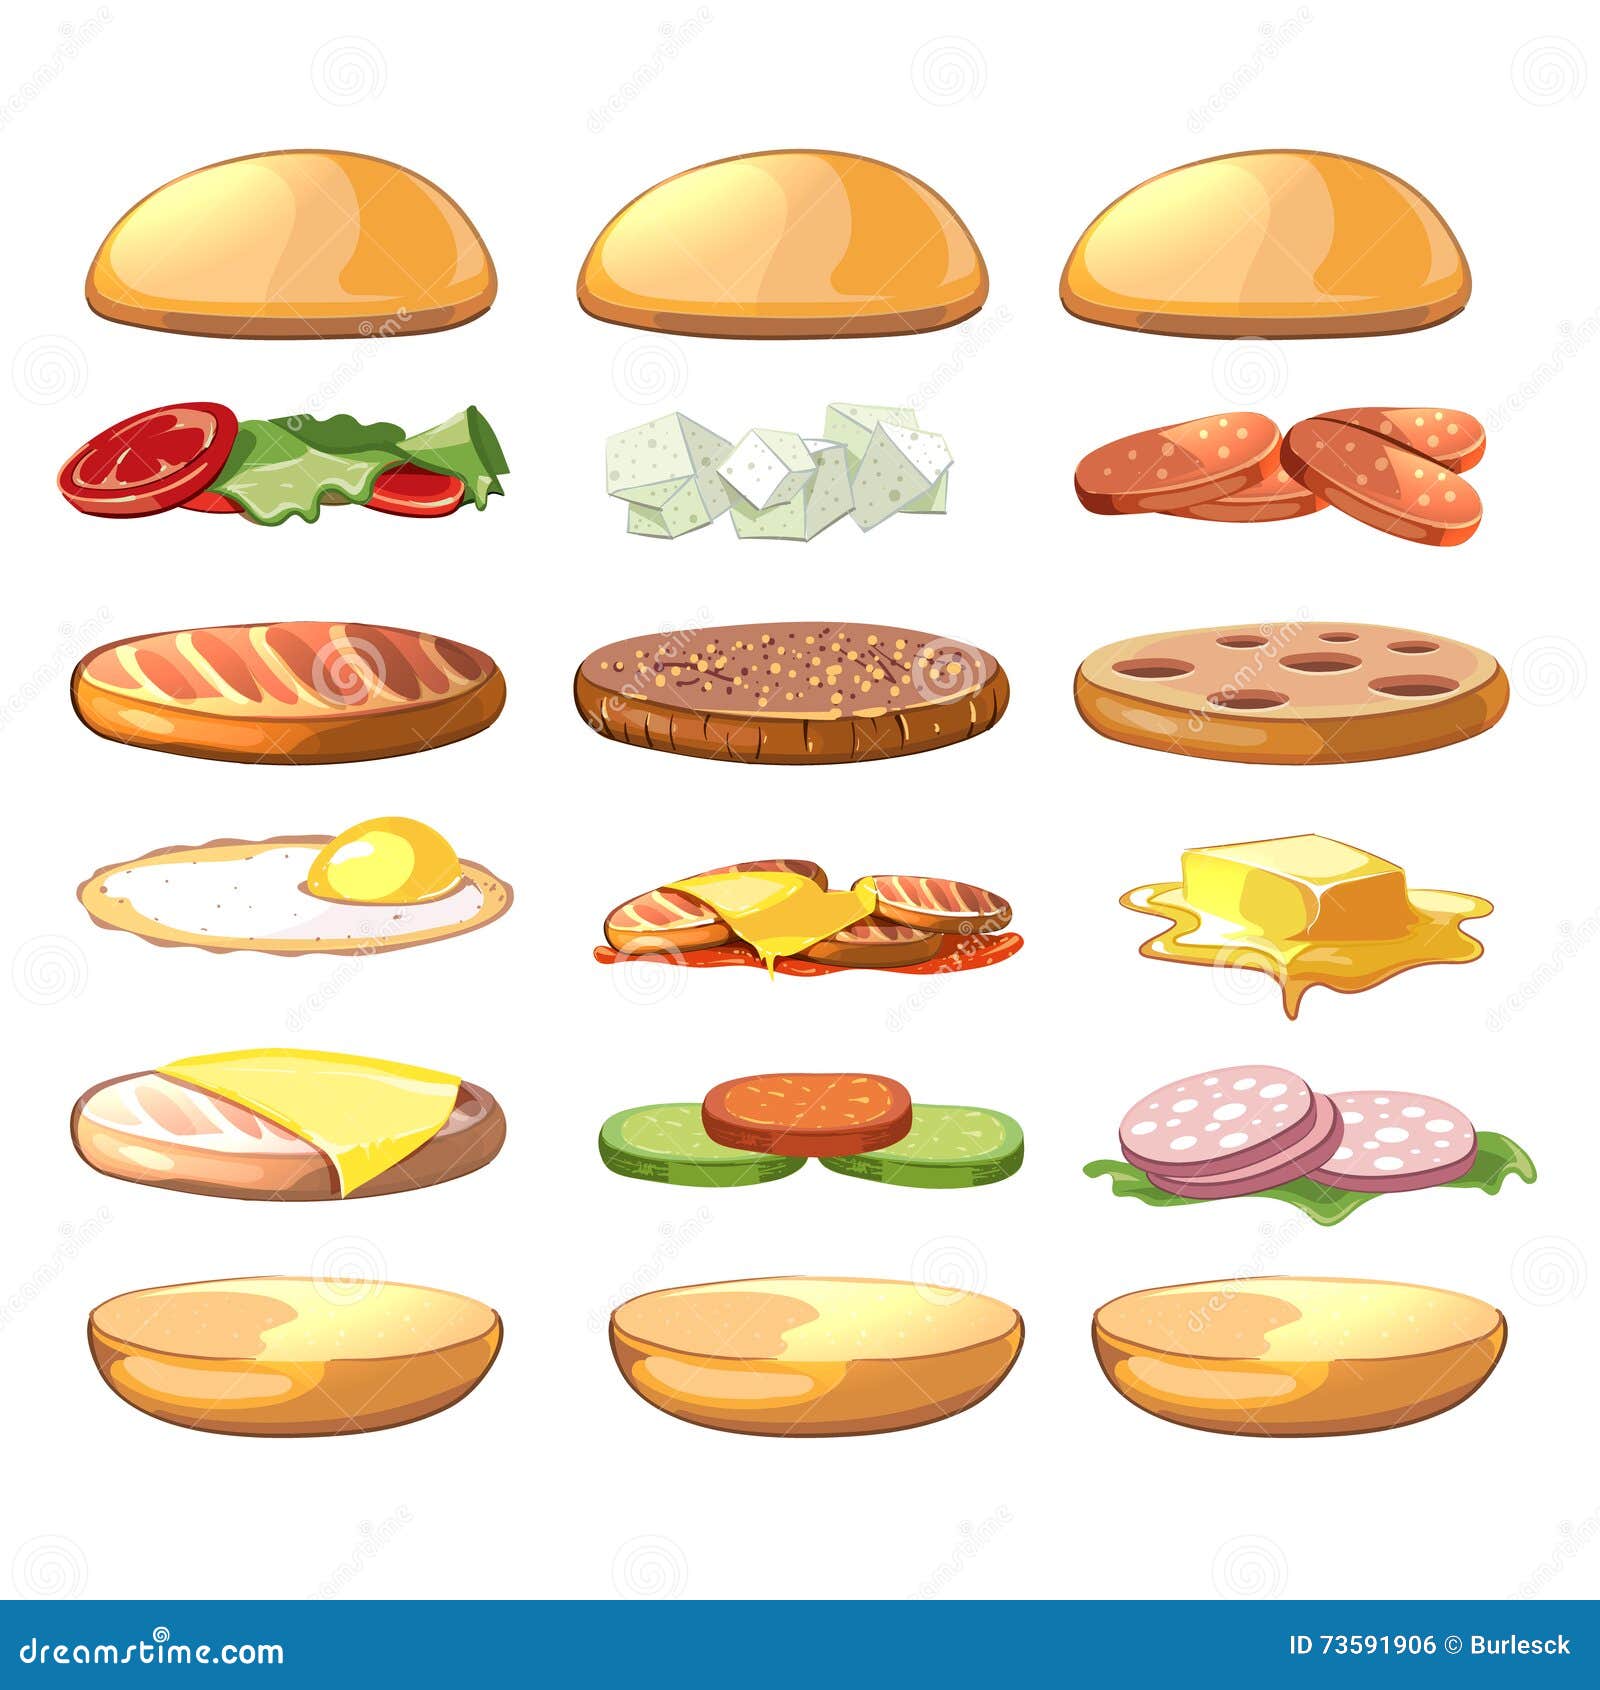 burgers ingredients.  fastfood set in cartoon style